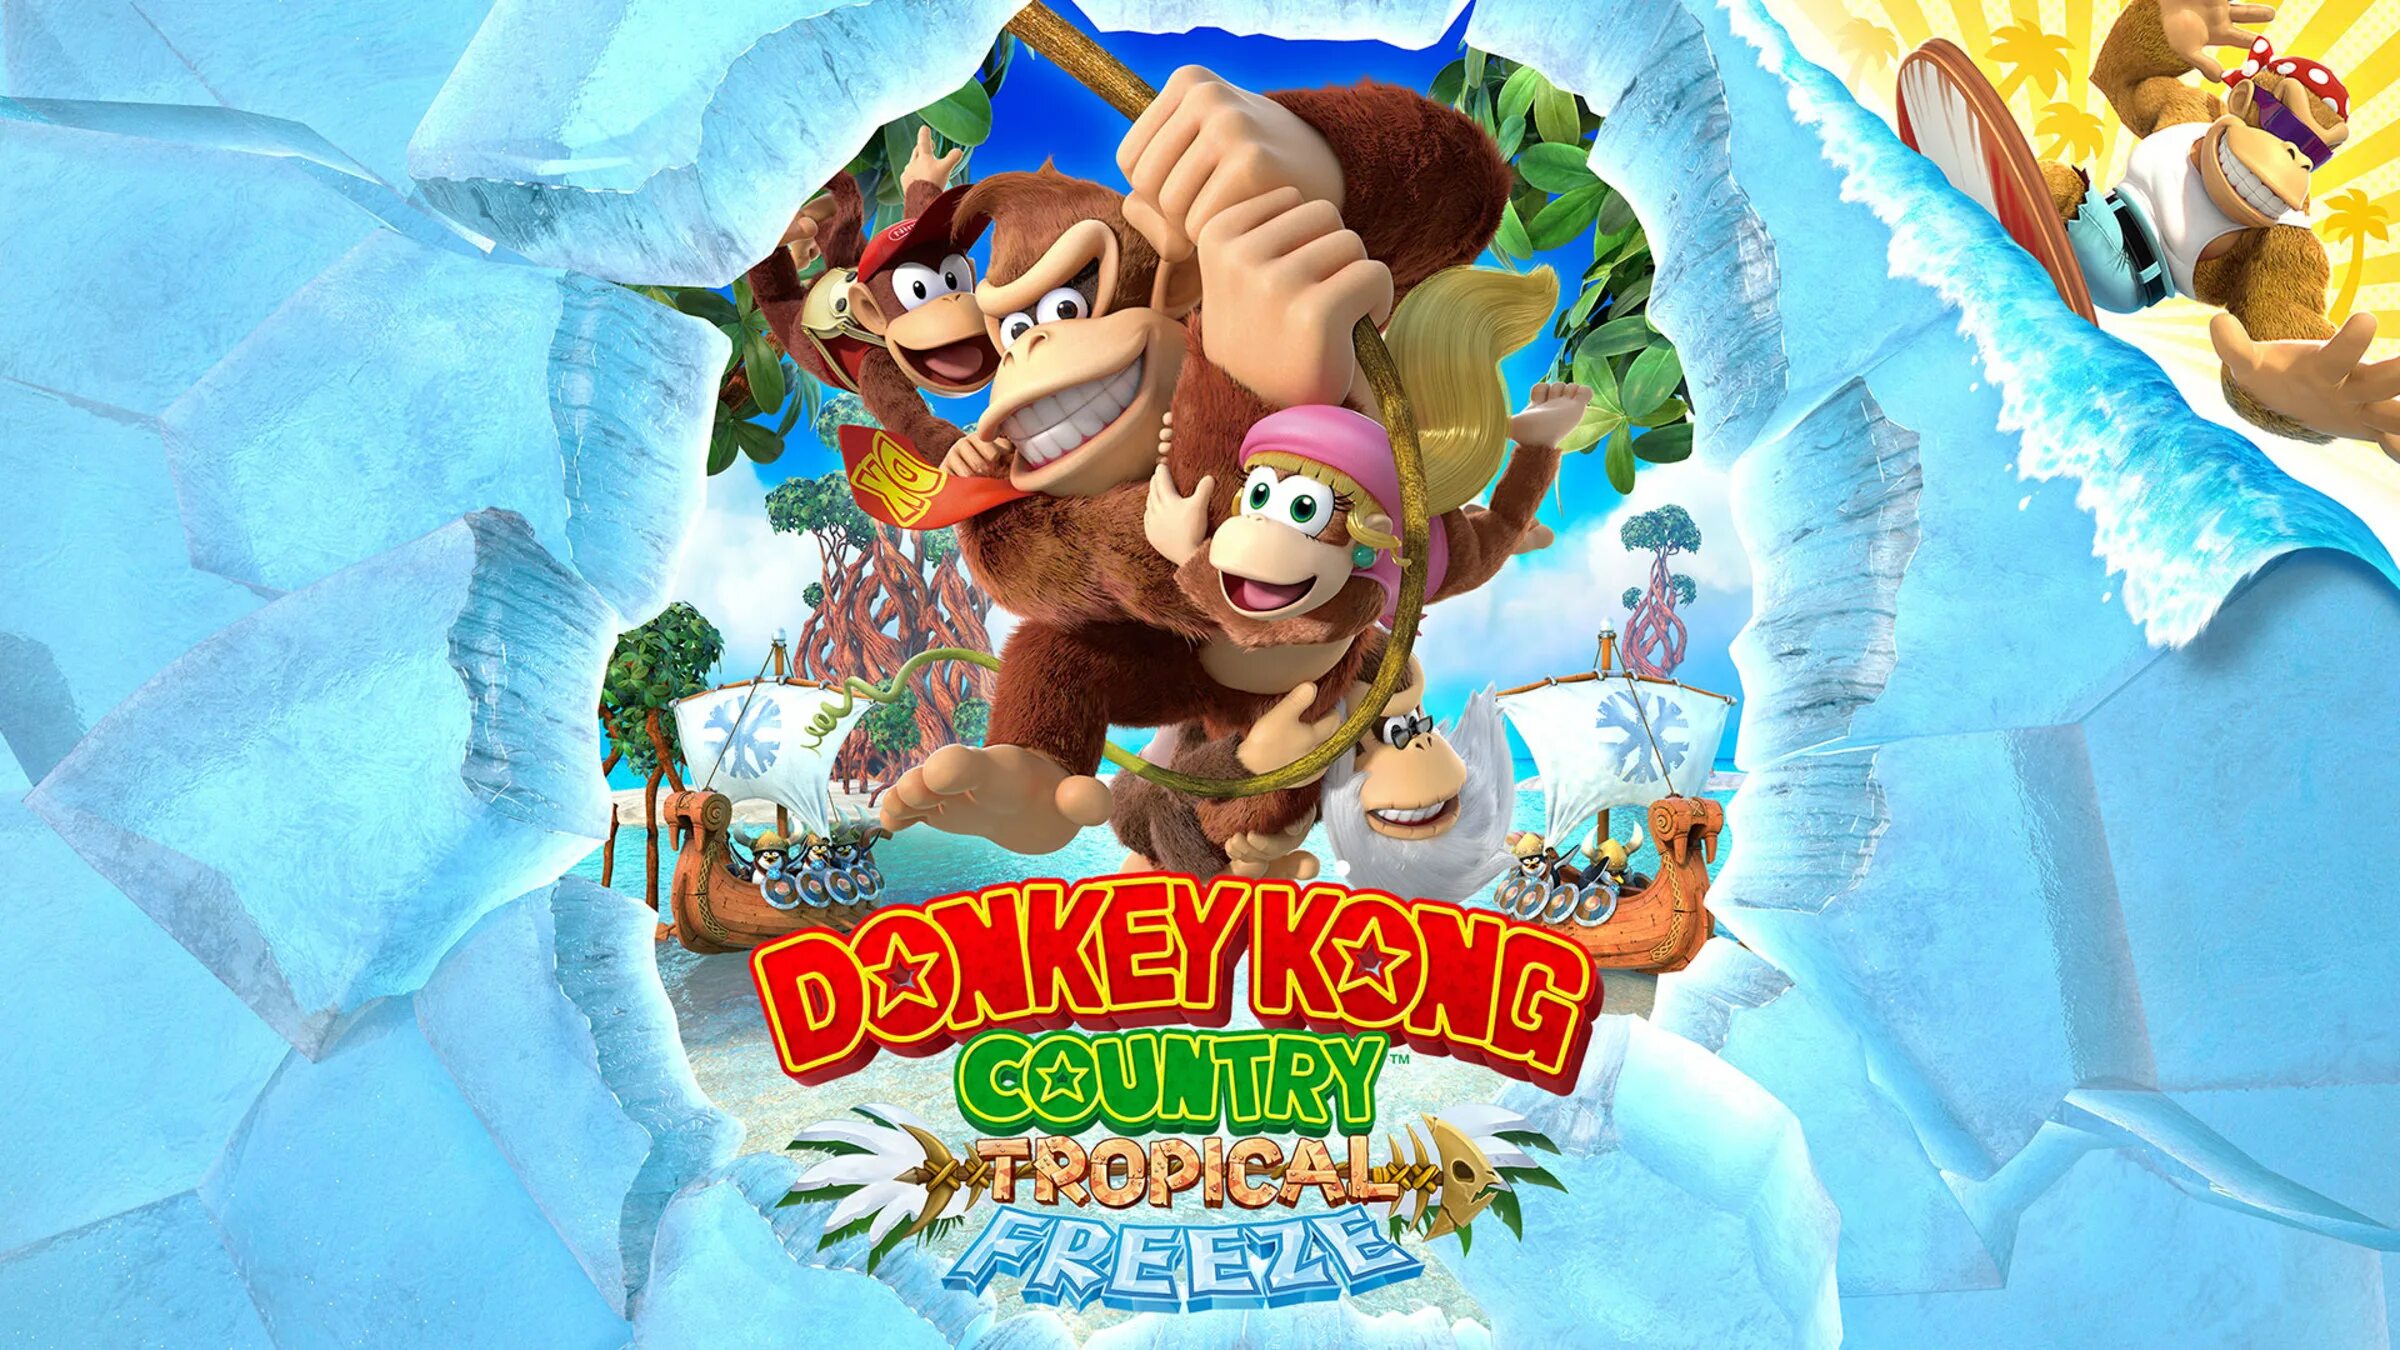 Donkey kong country freeze. Донки Конг Нинтендо. Донки Конг свитч. Donkey Kong Country Nintendo Switch. Donkey Kong Tropical Freeze Switch.